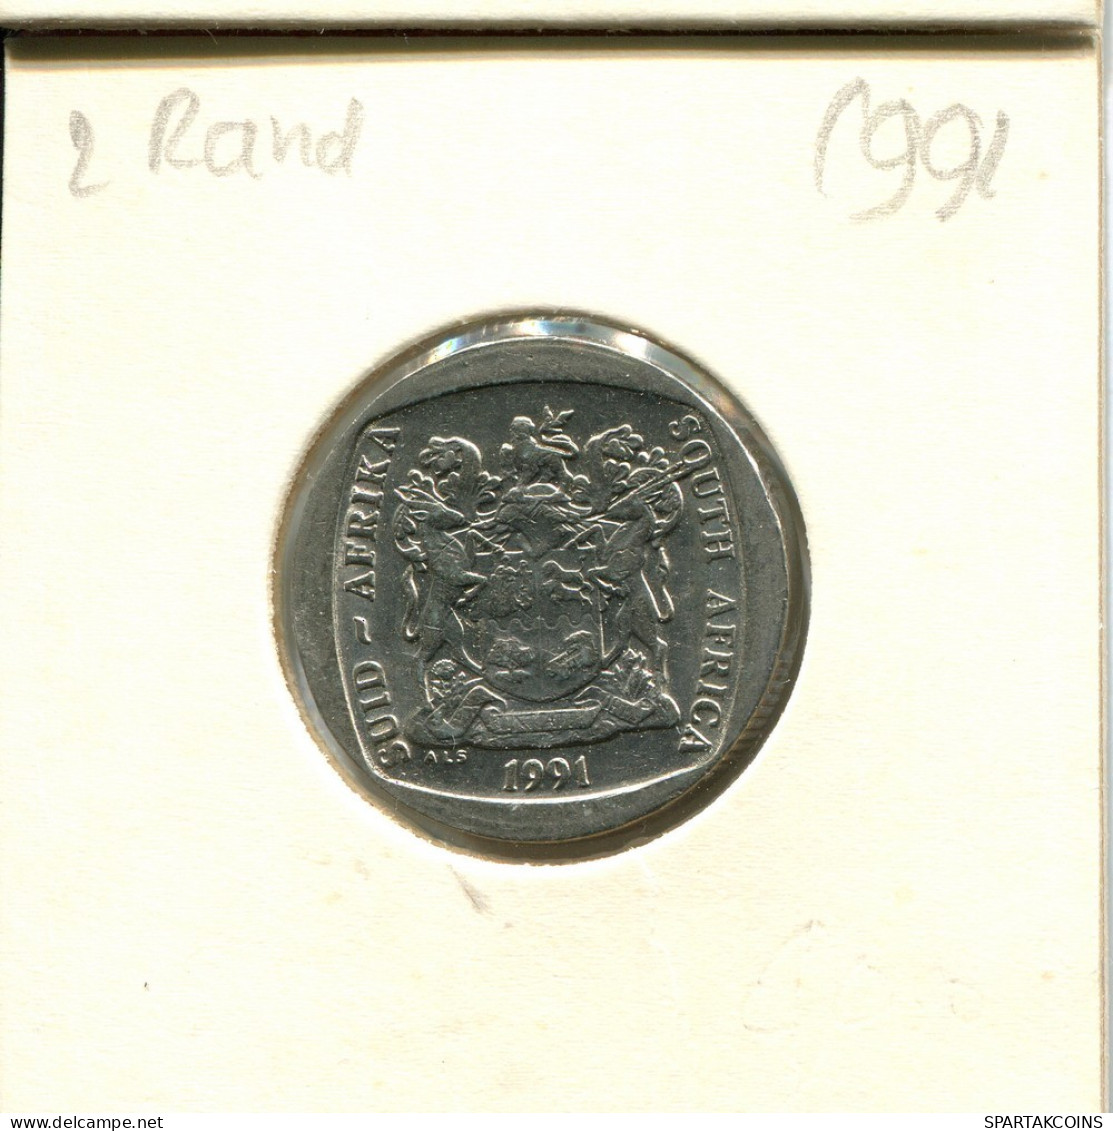 2 RAND 1991 SÜDAFRIKA SOUTH AFRICA Münze #AT163.D.A - Sud Africa